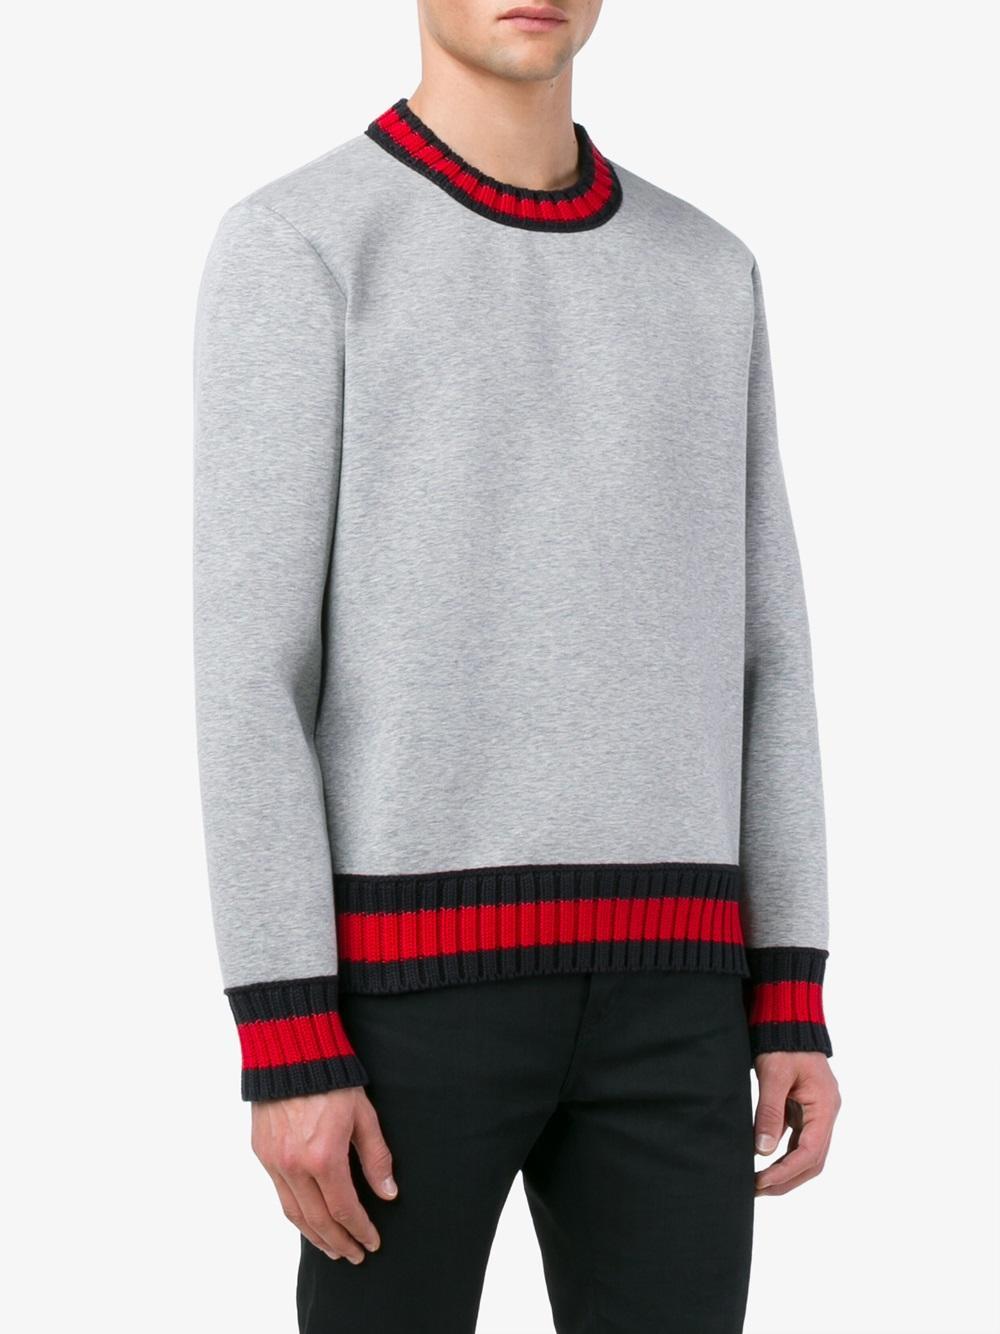 Lyst - Gucci Web Trim Sweatshirt in Gray for Men